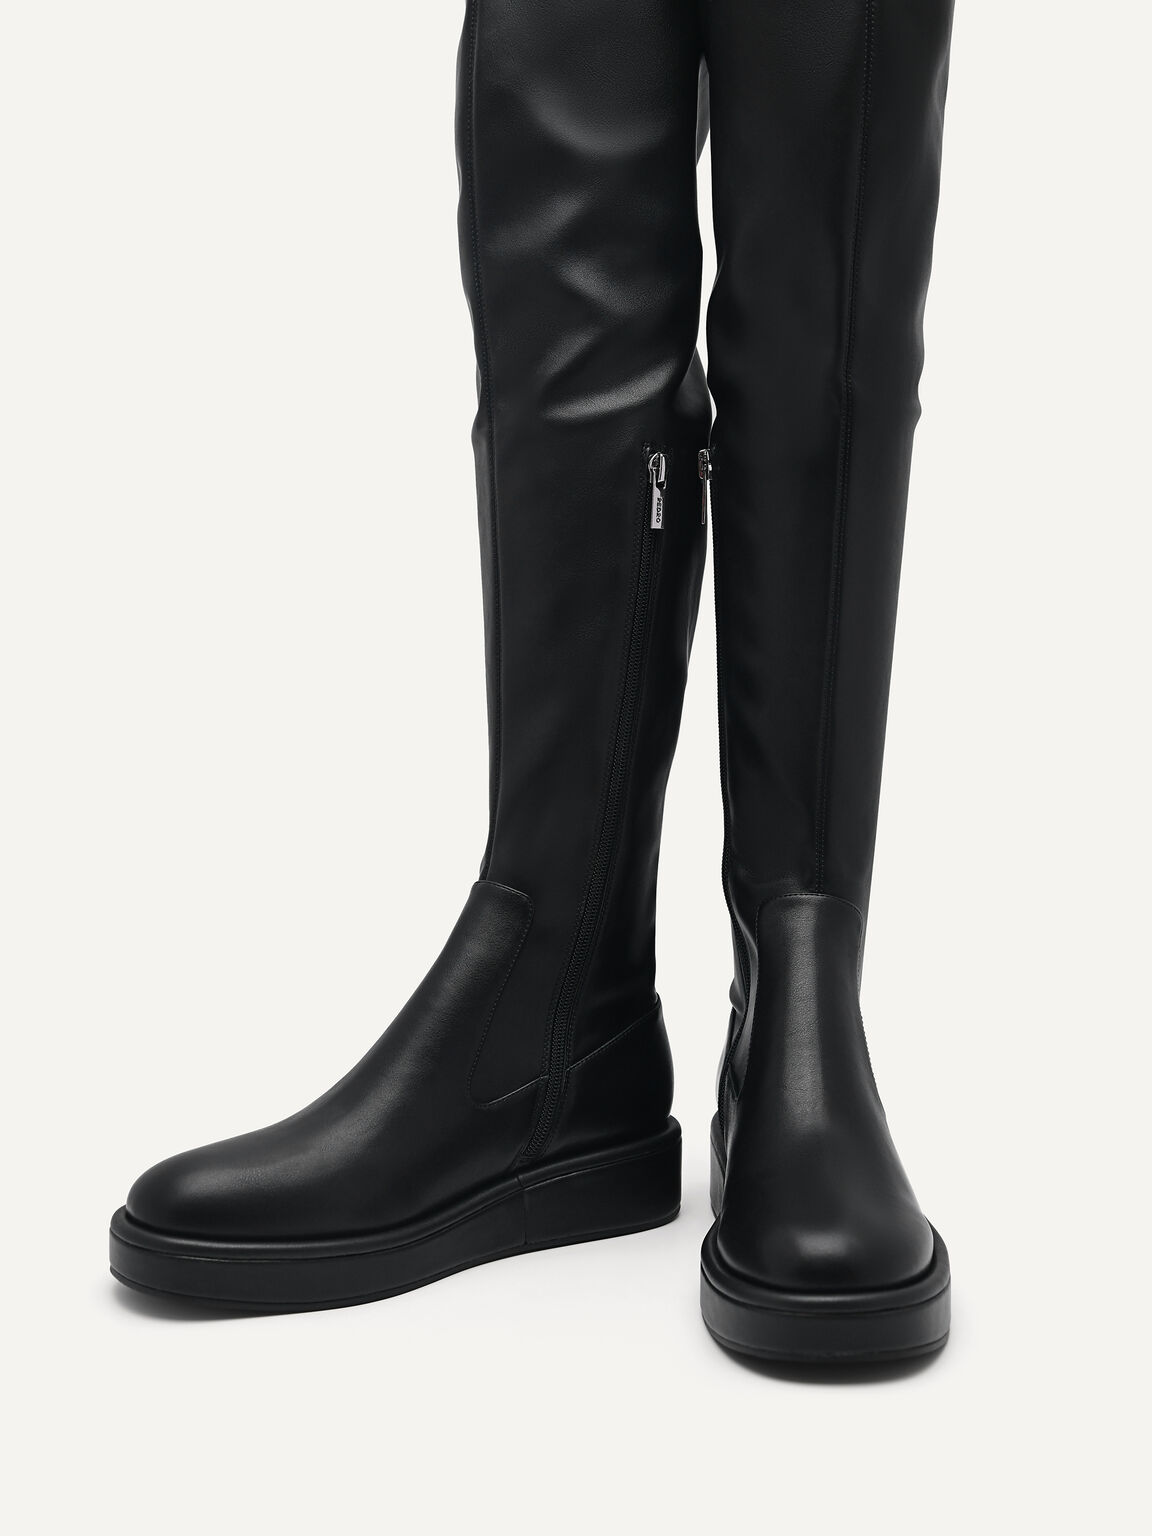 Dessau Knee-High Boots, Black